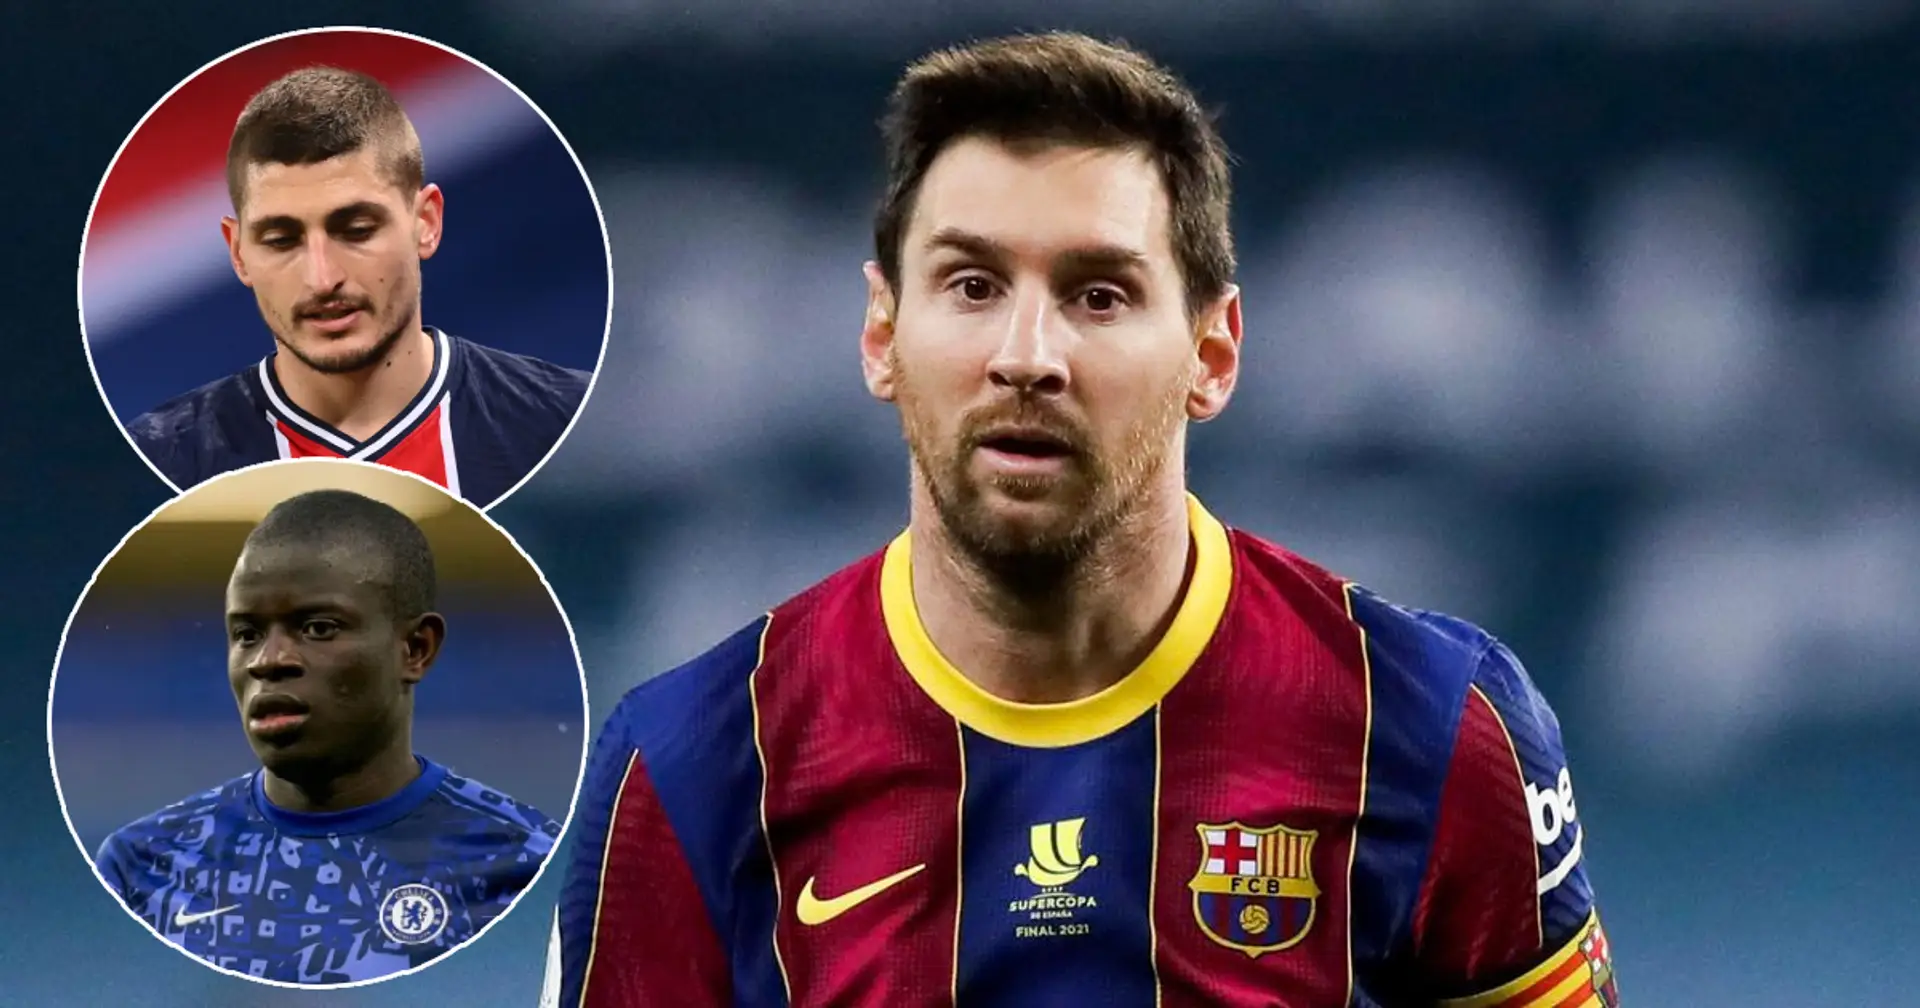 Messi taller than Verratti, Kante - fan lists 10 most popular short players